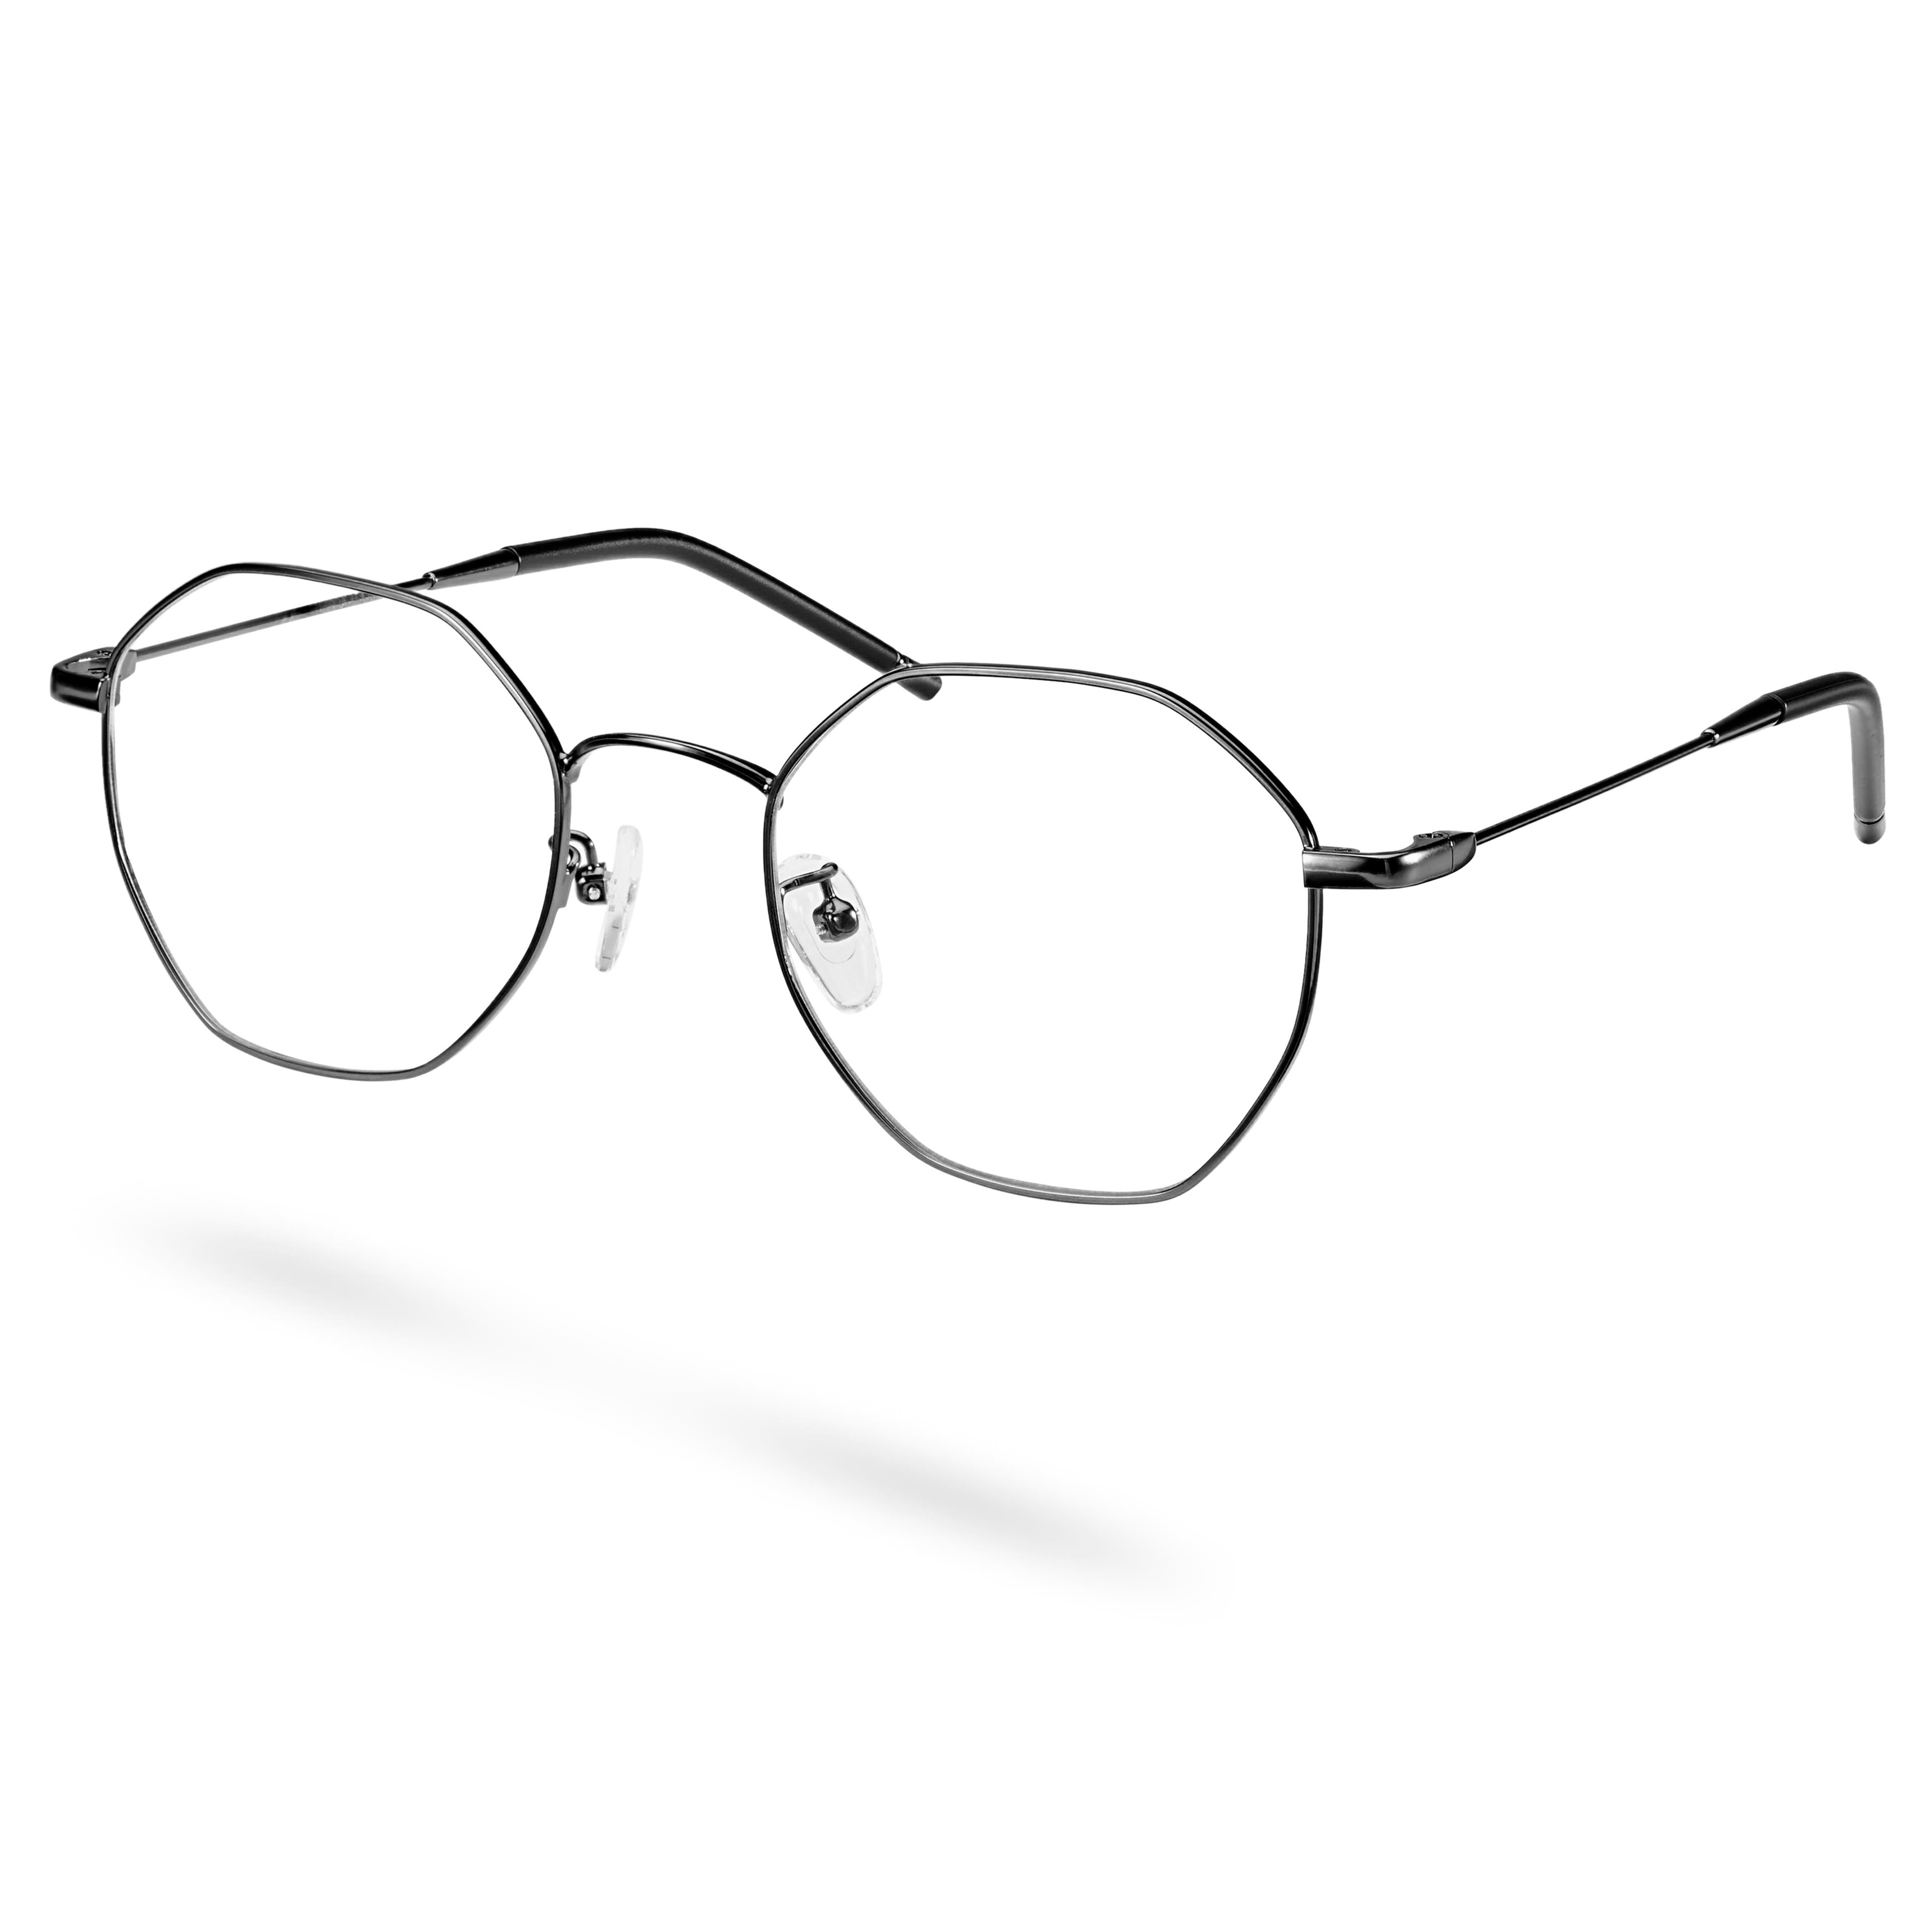 Executive Black Geometric Frame Clear Lens Glasses